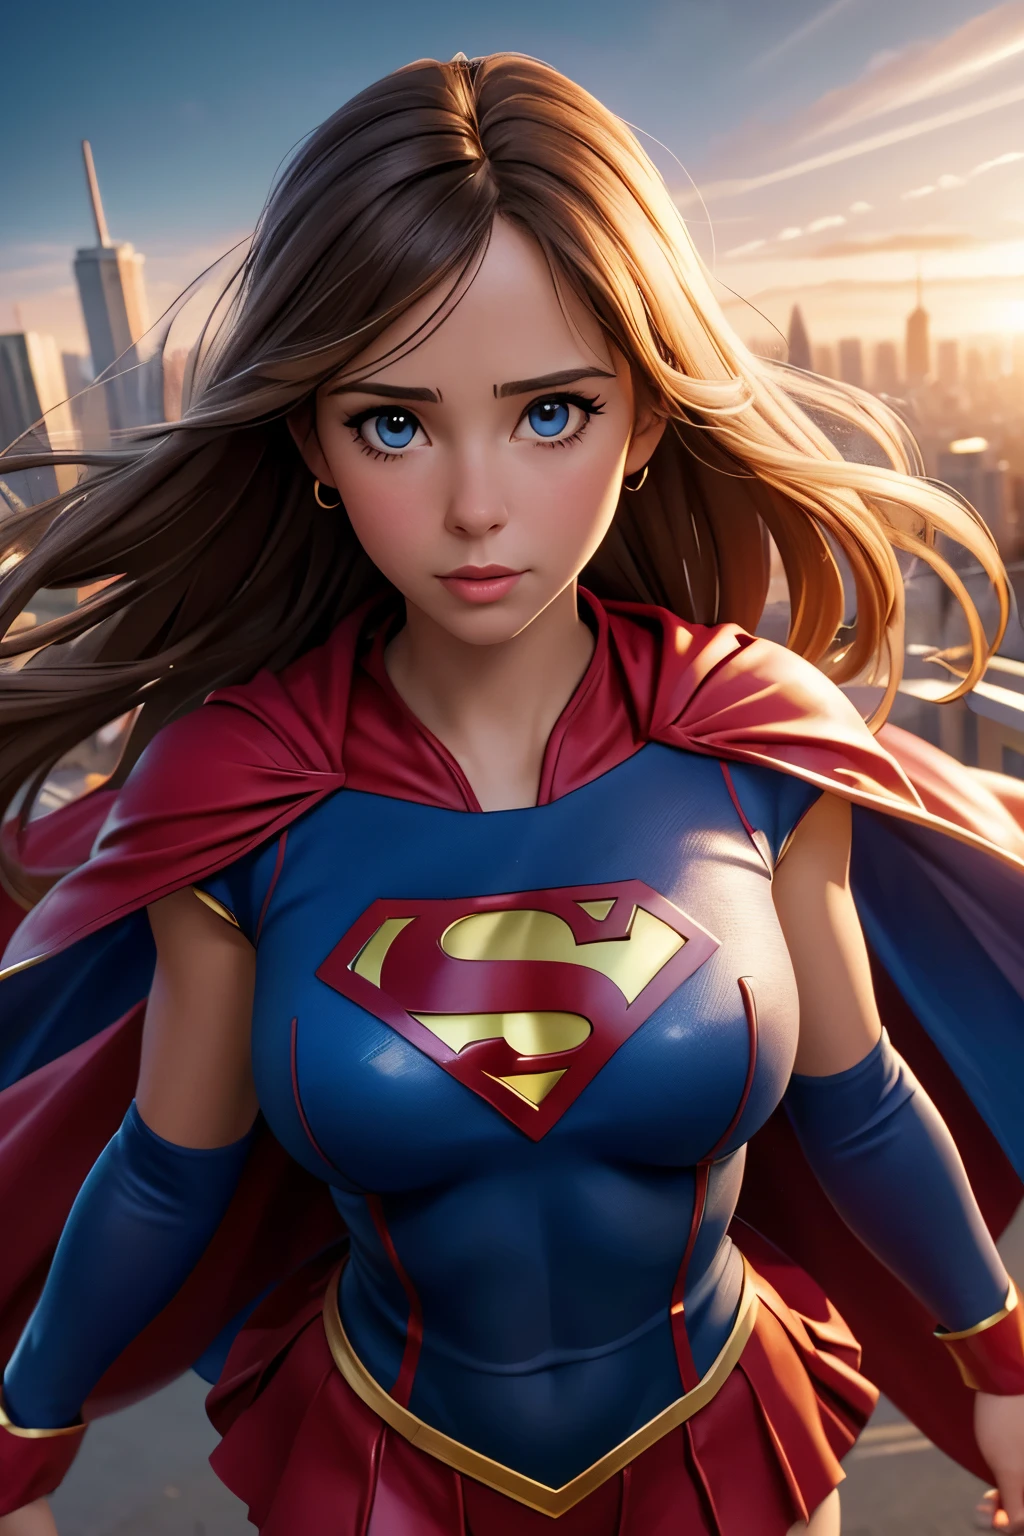 Jennifer Love Hewitt สาวน้อยแต่งตัวเป็น Supergirl ในปี 1990,ดวงตาที่มีรายละเอียดสวยงาม,ริมฝีปากที่มีรายละเอียดสวยงาม,ดวงตาและใบหน้าที่มีรายละเอียดมาก,ขนตายาว,เครื่องแต่งกายอันเป็นเอกลักษณ์ของ Supergirl,ชุดสีแดงและสีน้ำเงินที่น่าทึ่ง,การแสดงออกที่เด็ดเดี่ยว,ท่าทางมั่นใจ,บินอยู่เหนือทิวทัศน์ของเมือง,ท้องฟ้าสีฟ้าใส,คุณภาพสูง,มีรายละเอียดมาก (คุณภาพดีที่สุด,4เค,8k,ความสูง,ผลงานชิ้นเอก:1.2),แสงที่สมจริง,สไตล์แนวตั้งที่น่าทึ่ง,สีสันสดใส,เสื้อคลุมส่องแสง,โฟกัสคมชัด,รายละเอียดคมชัด,บินด้วยความเร็วและพลังอันยิ่งใหญ่,ฉากที่สร้างแรงบันดาลใจและกล้าหาญ.